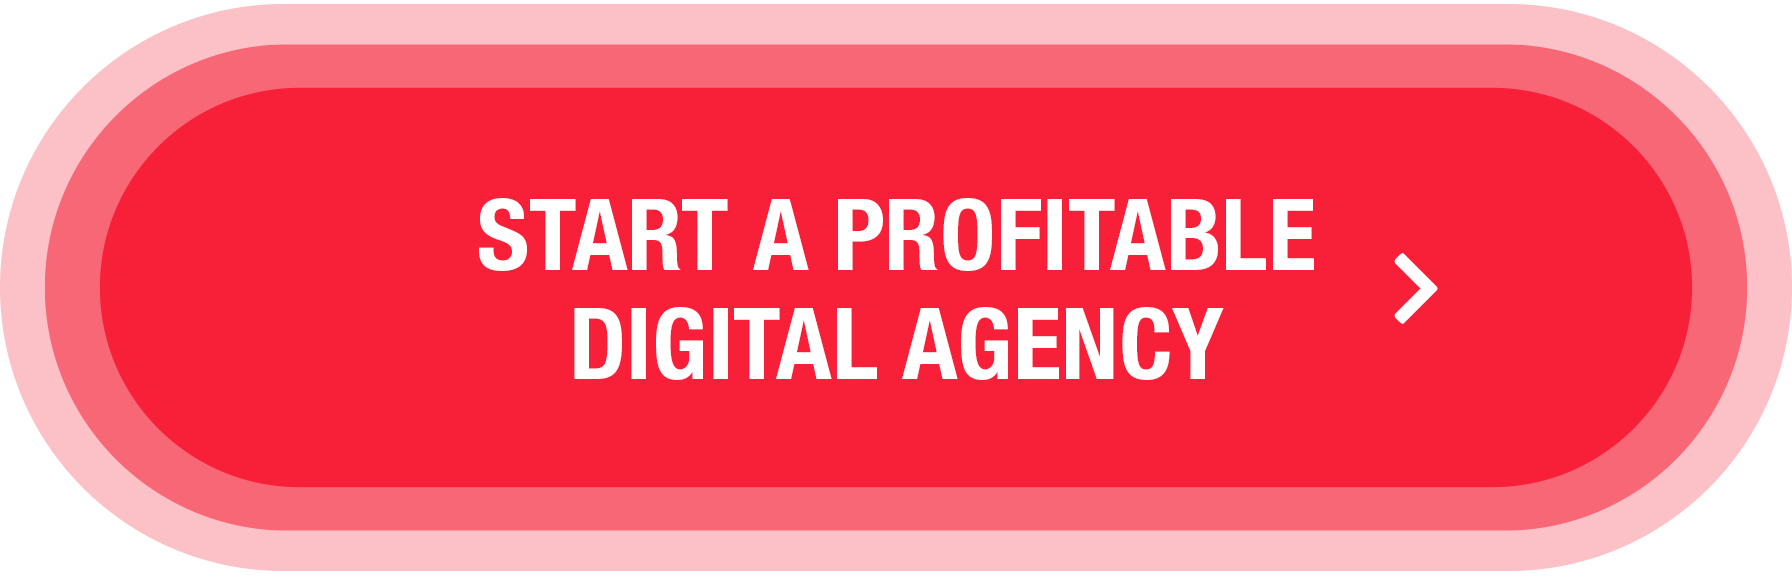 Start a profitable agency button